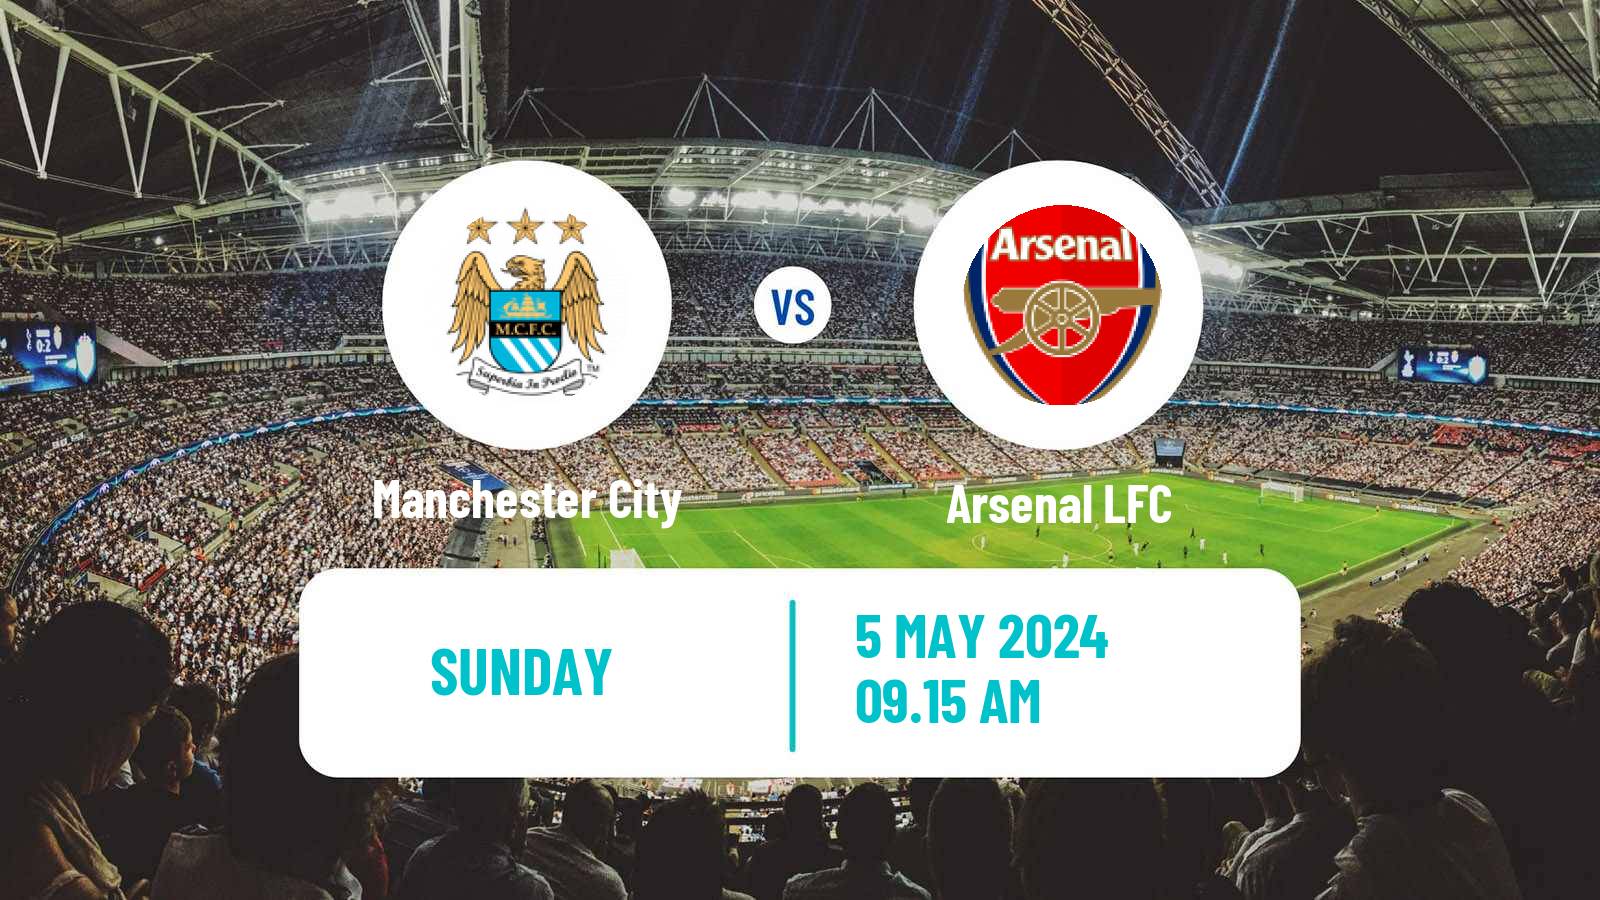 Soccer English WSL Manchester City - Arsenal LFC